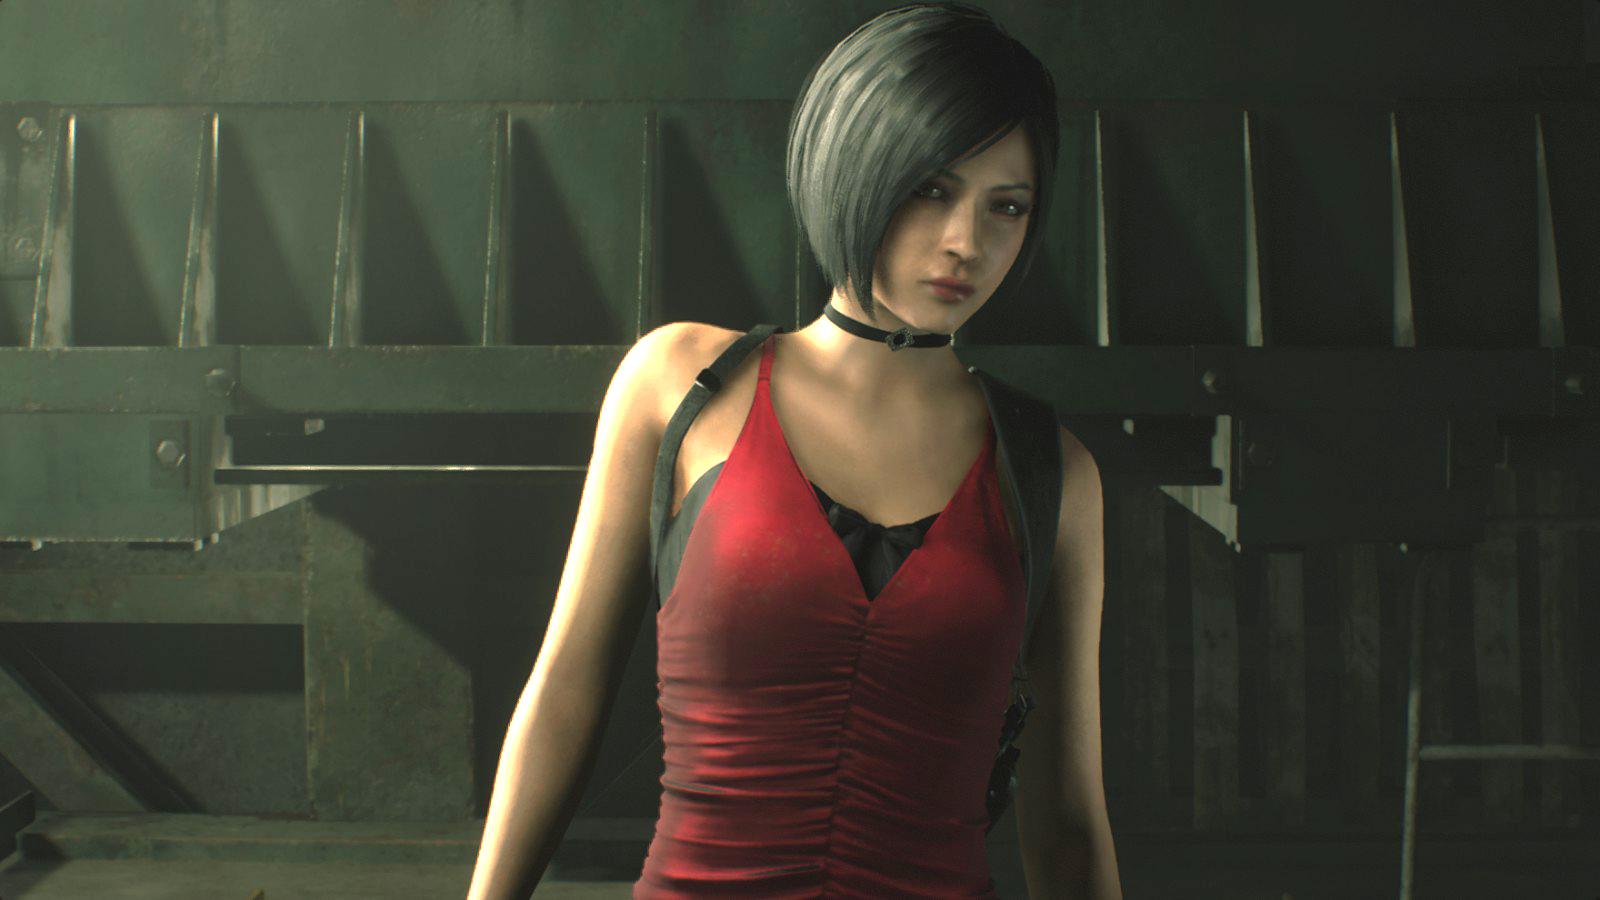 HD wallpaper: Ada Wong, Resident Evil, Resident Evil 2, Resident Evil 2  Remake